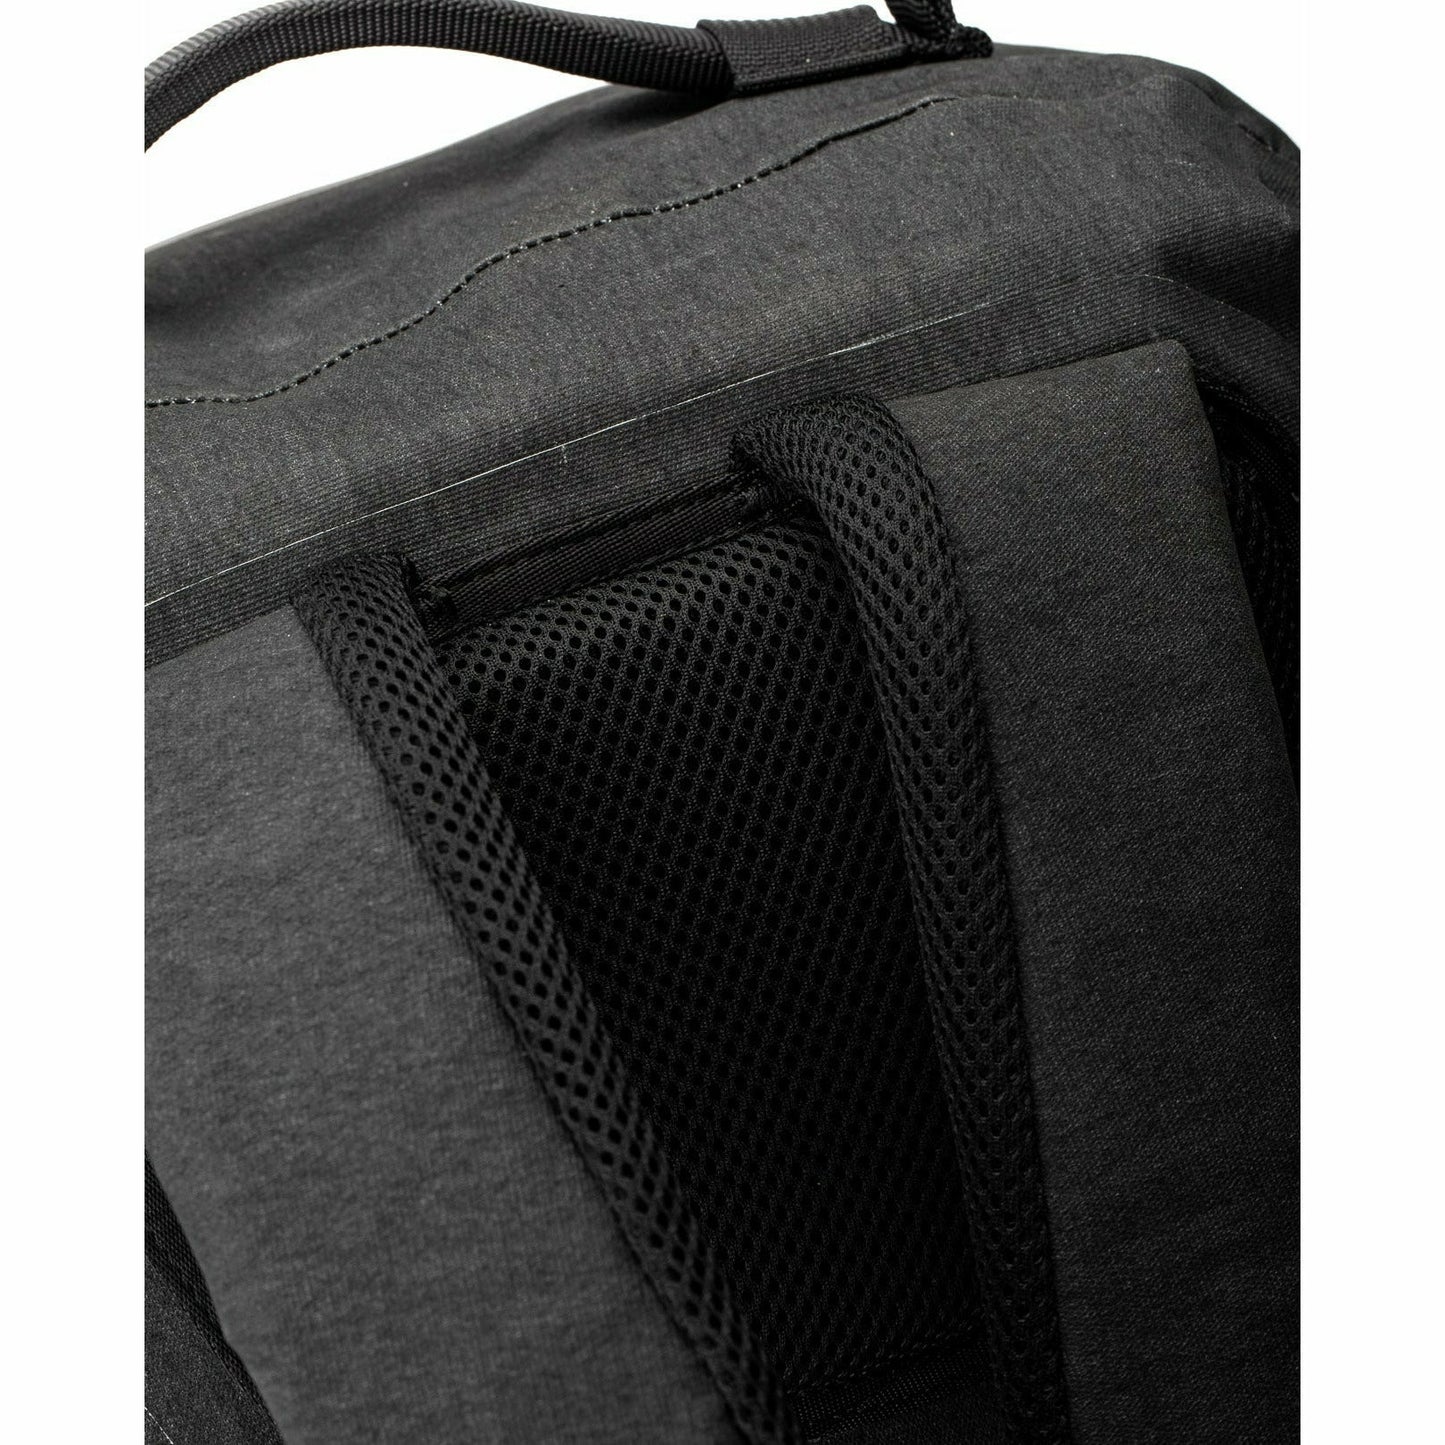 Creatures of Leisure - Travel Dry Bag 25L : Black